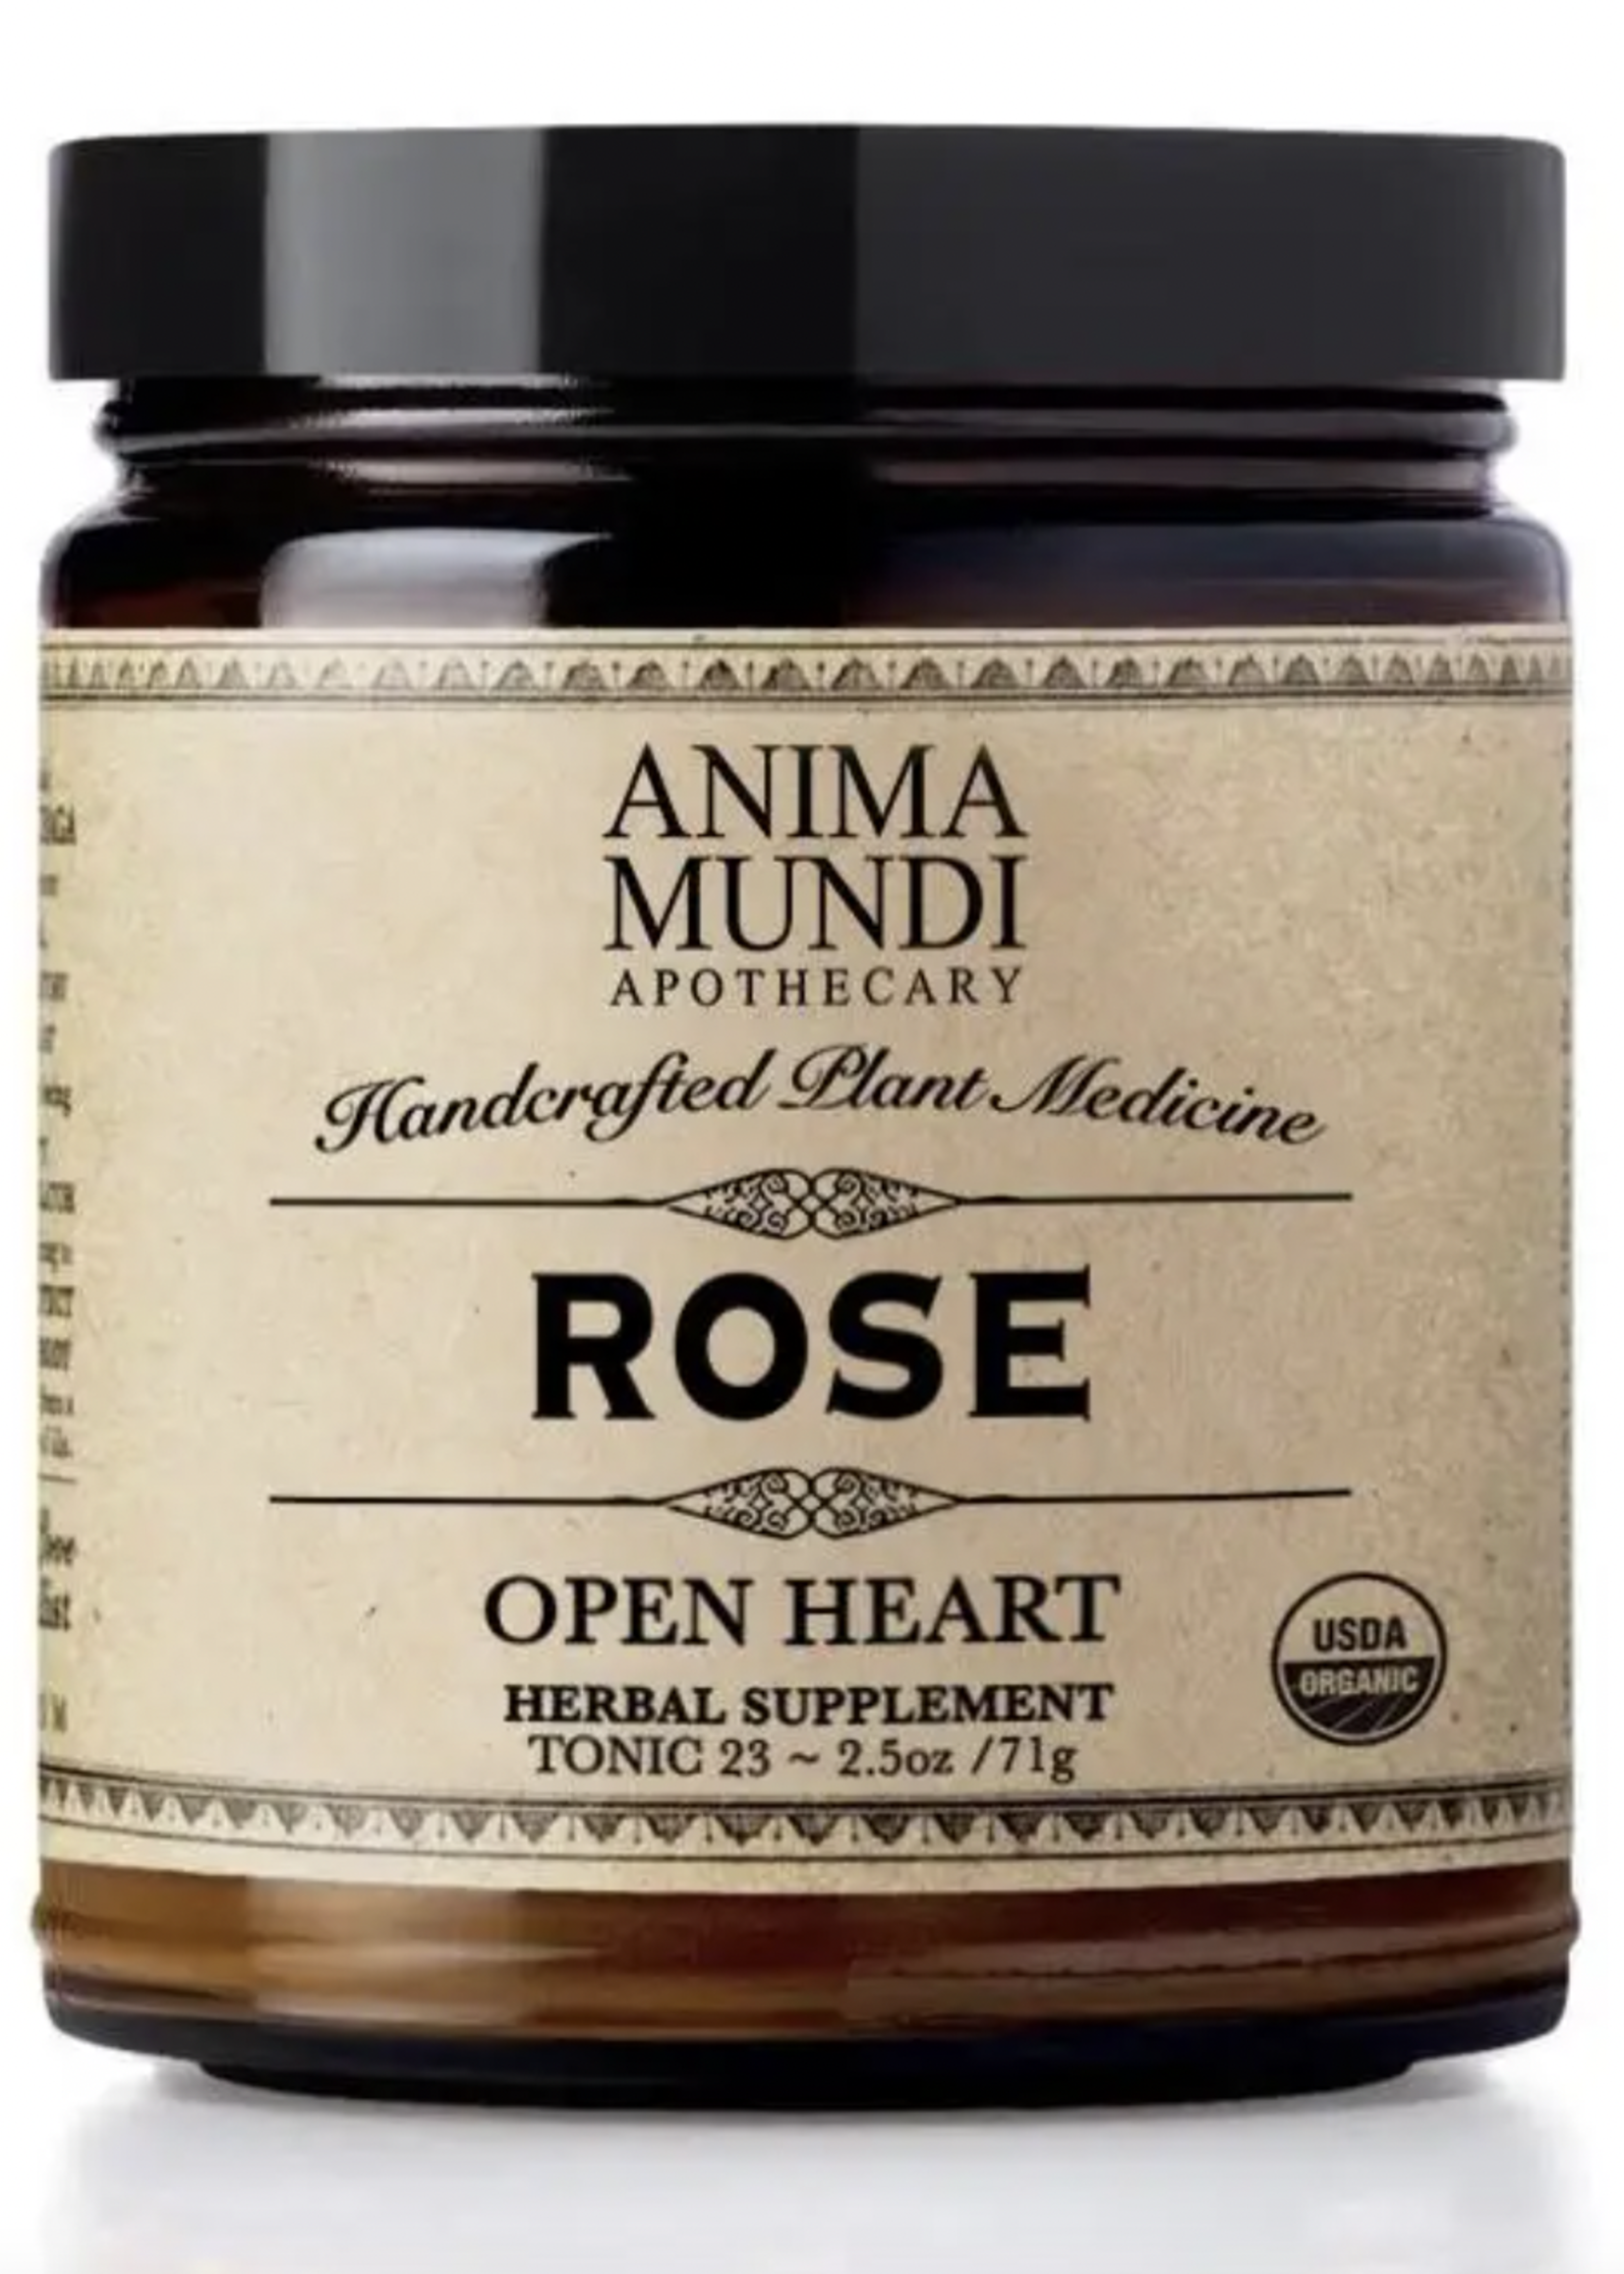 Anima Mundi Apothecary "Rose" Open Heart Herbal Supplement